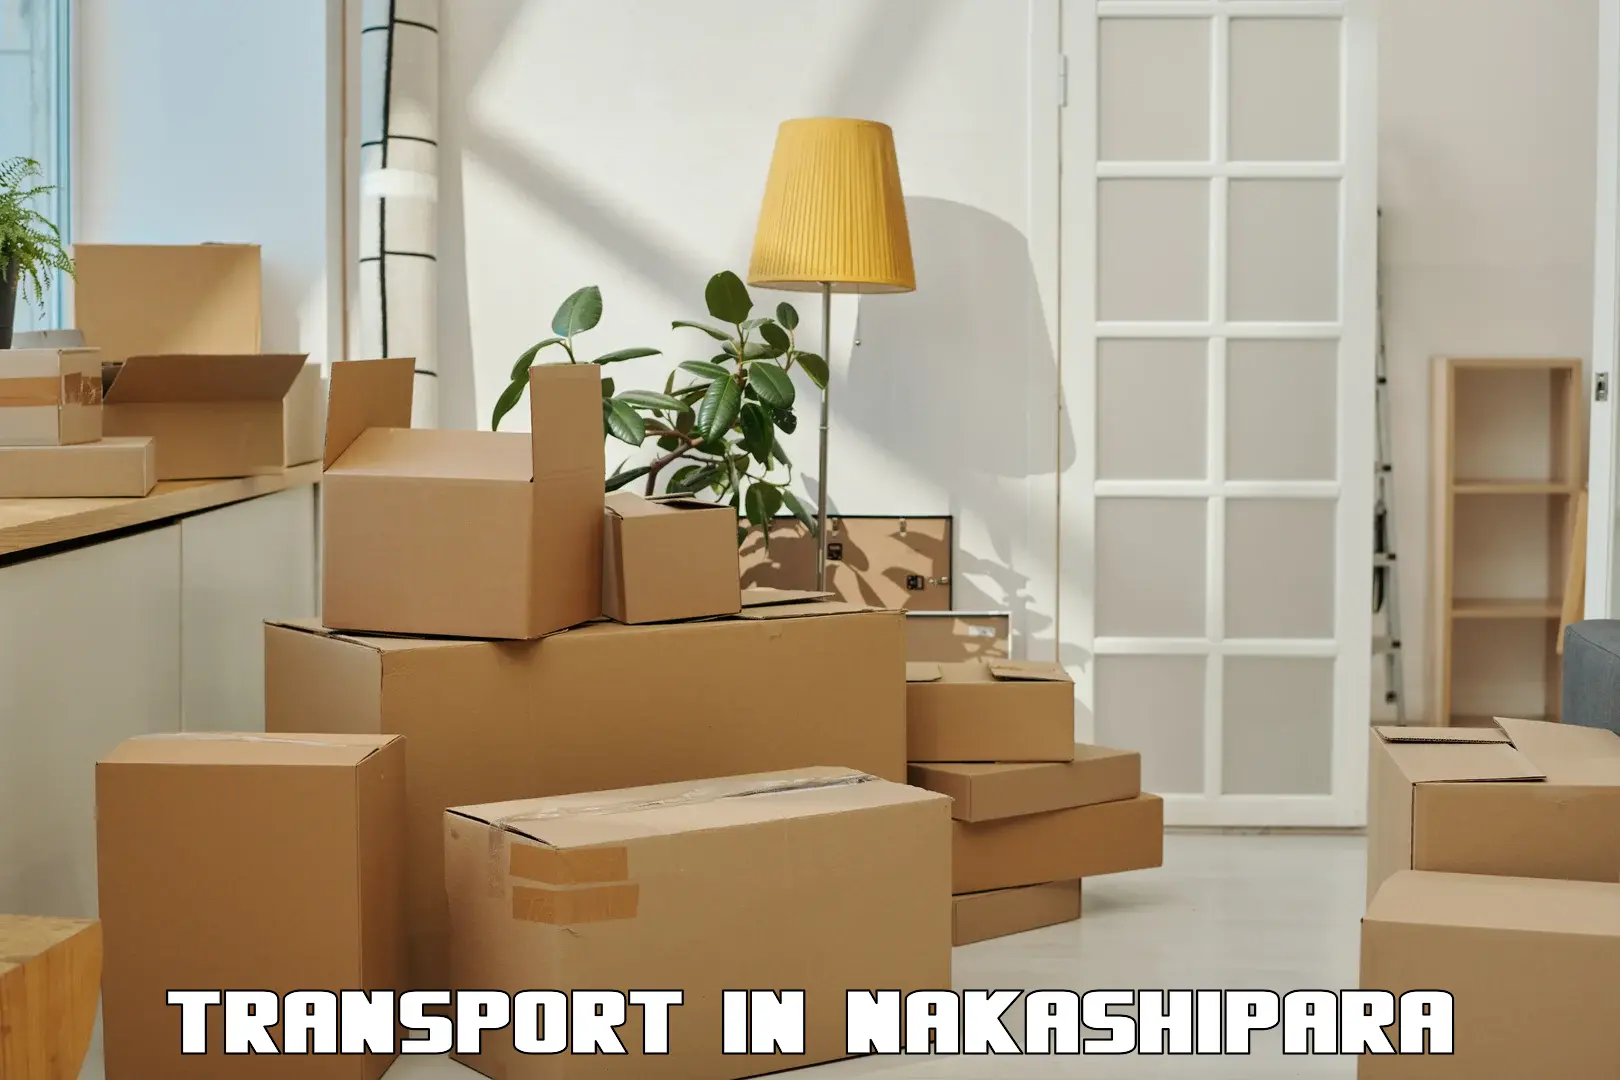 Vehicle parcel service in Nakashipara